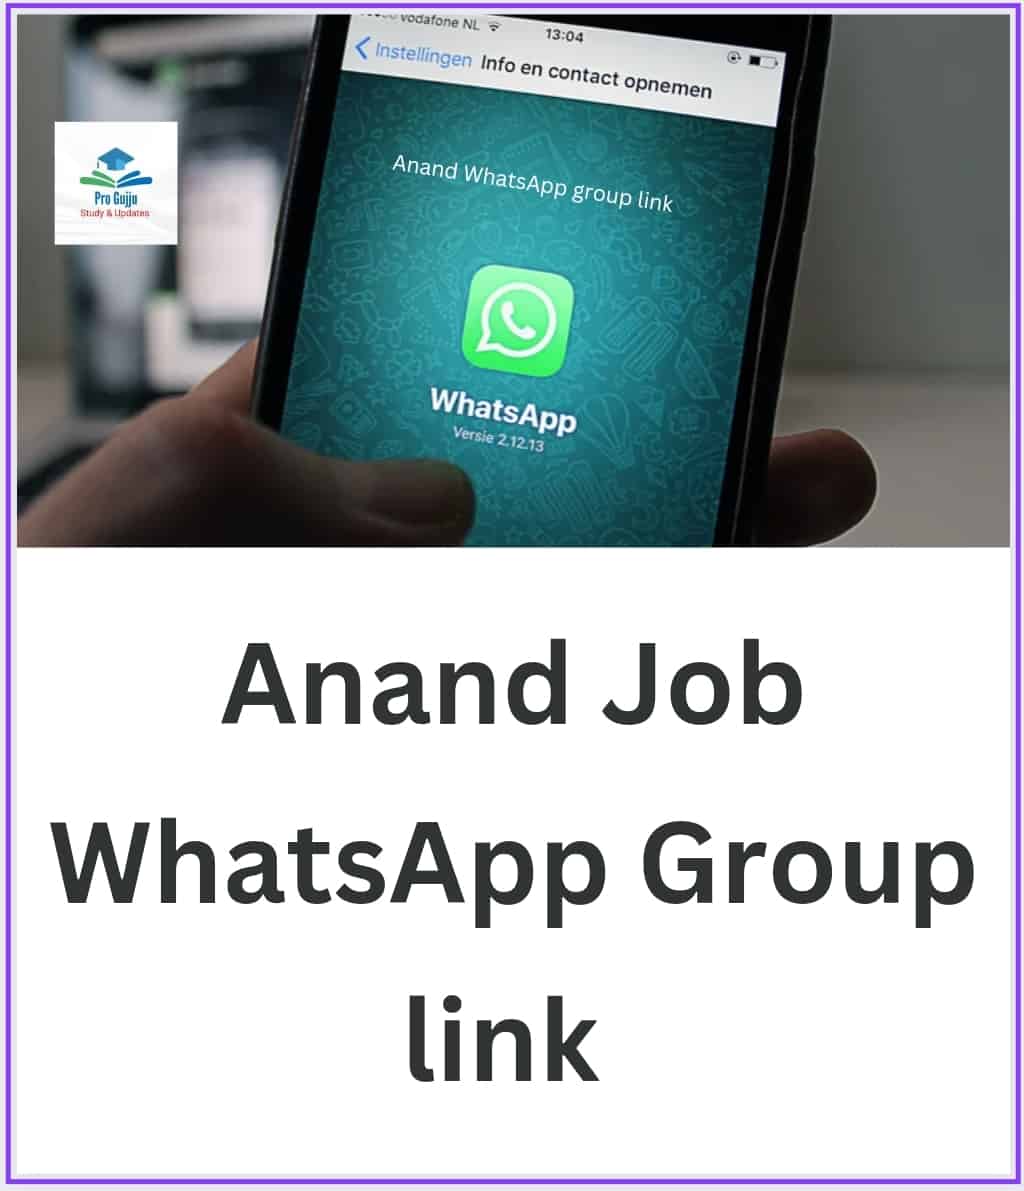 Anand Job WhatsApp Group Link